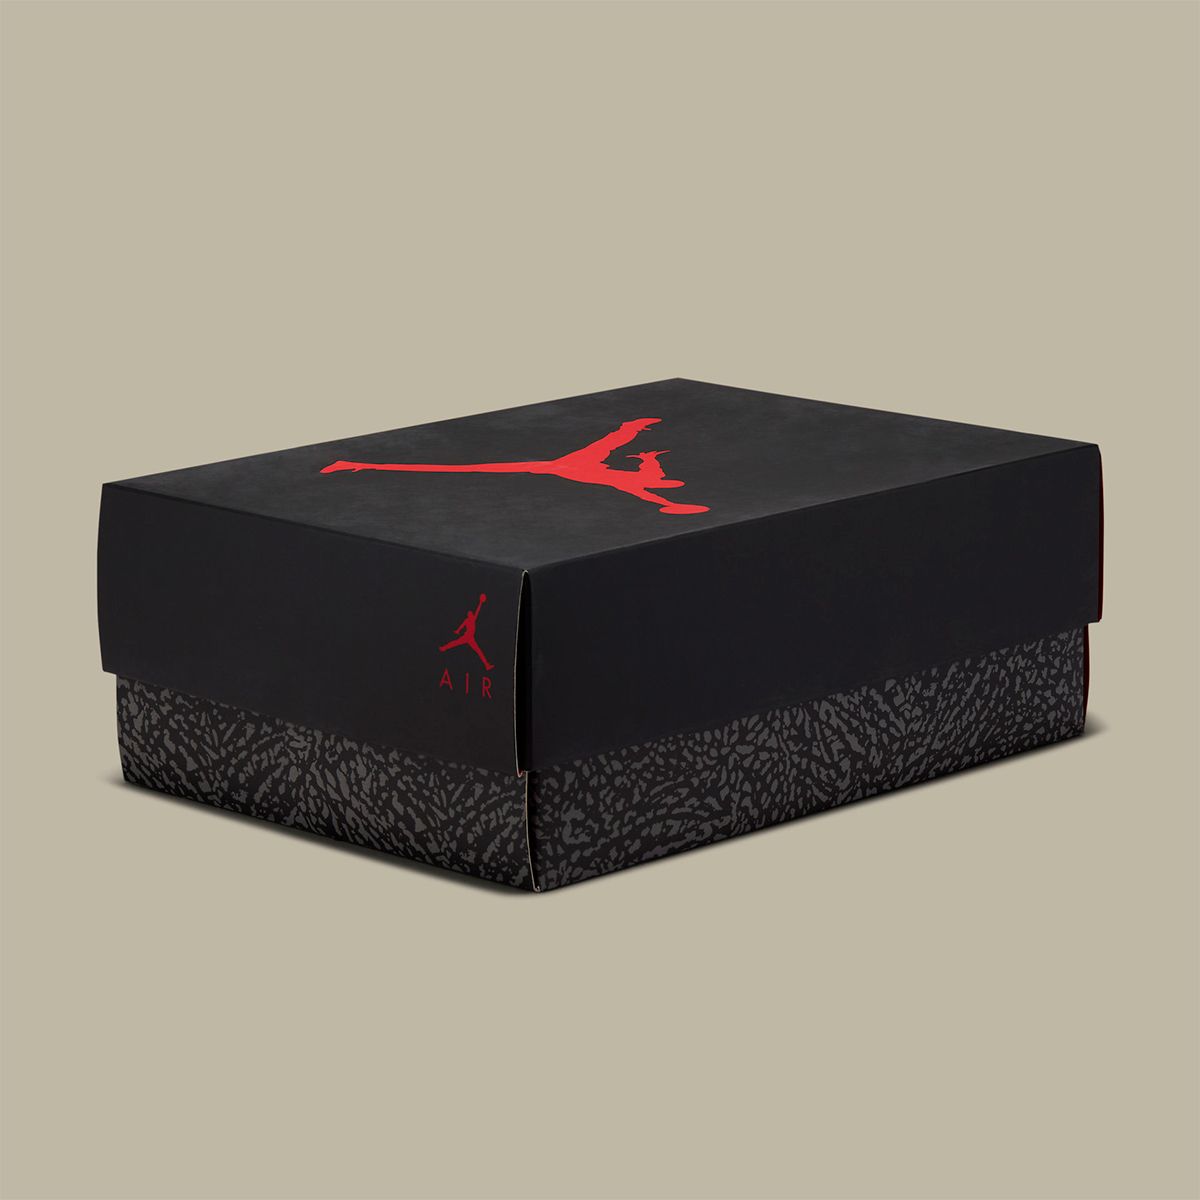 Where to Buy the Air Jordan 3 “Mars Stone” | HOUSE OF HEAT